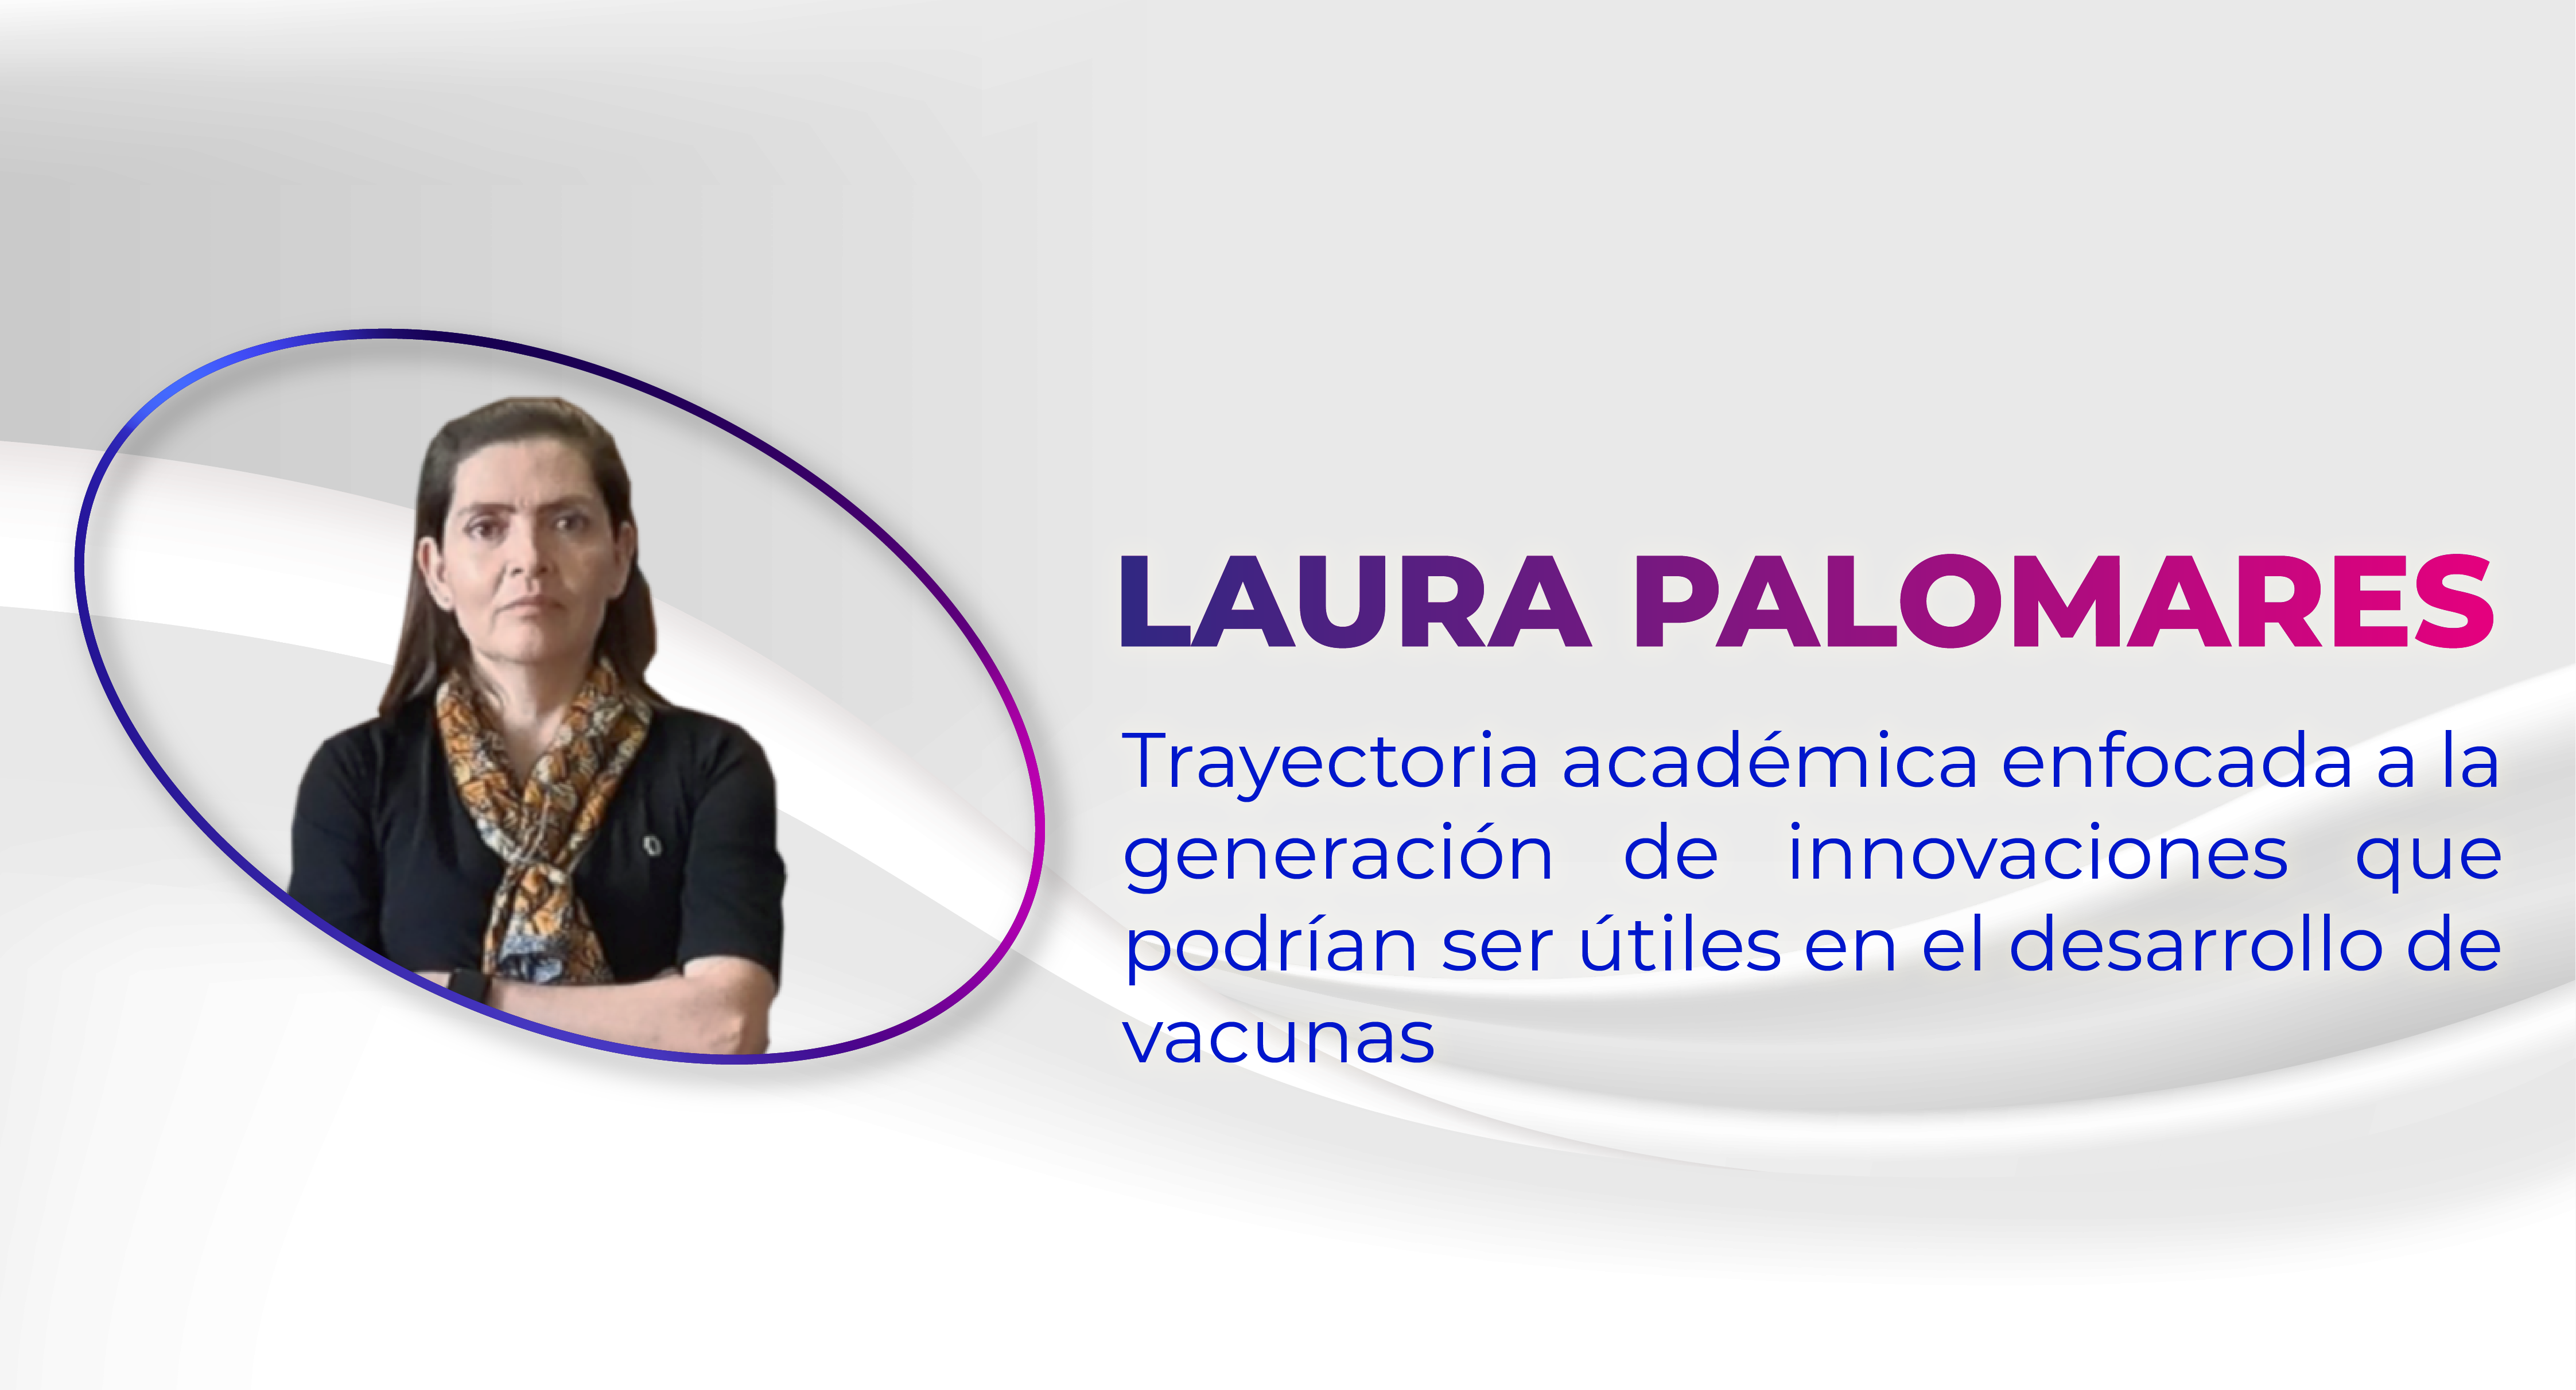 Laura Palomares